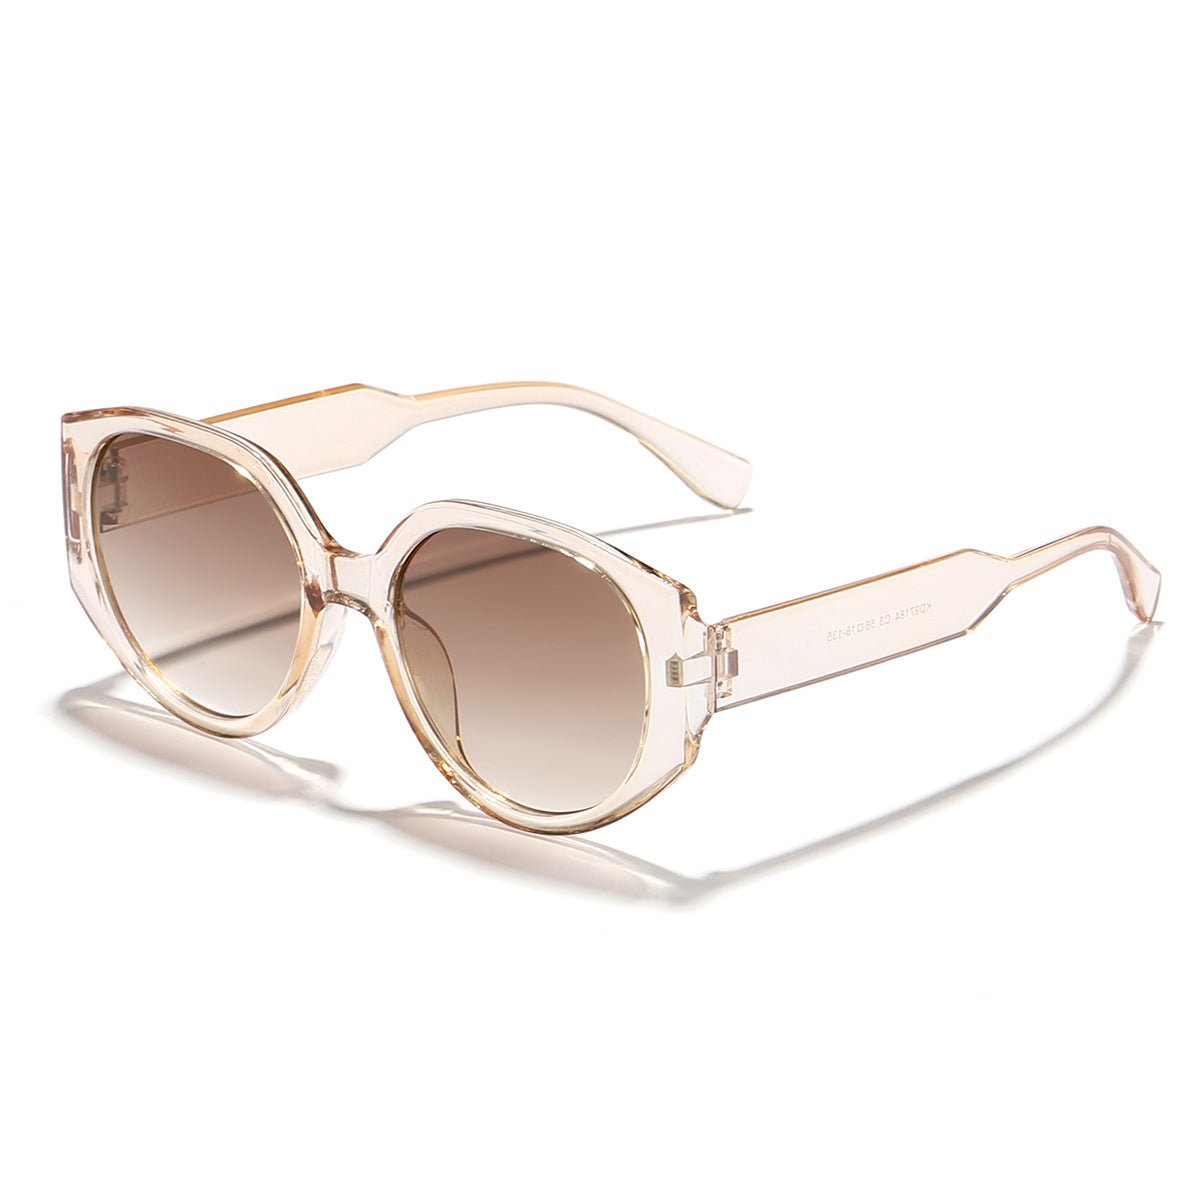 Sun-resistant Sunglasses Outdoor Wear Essential